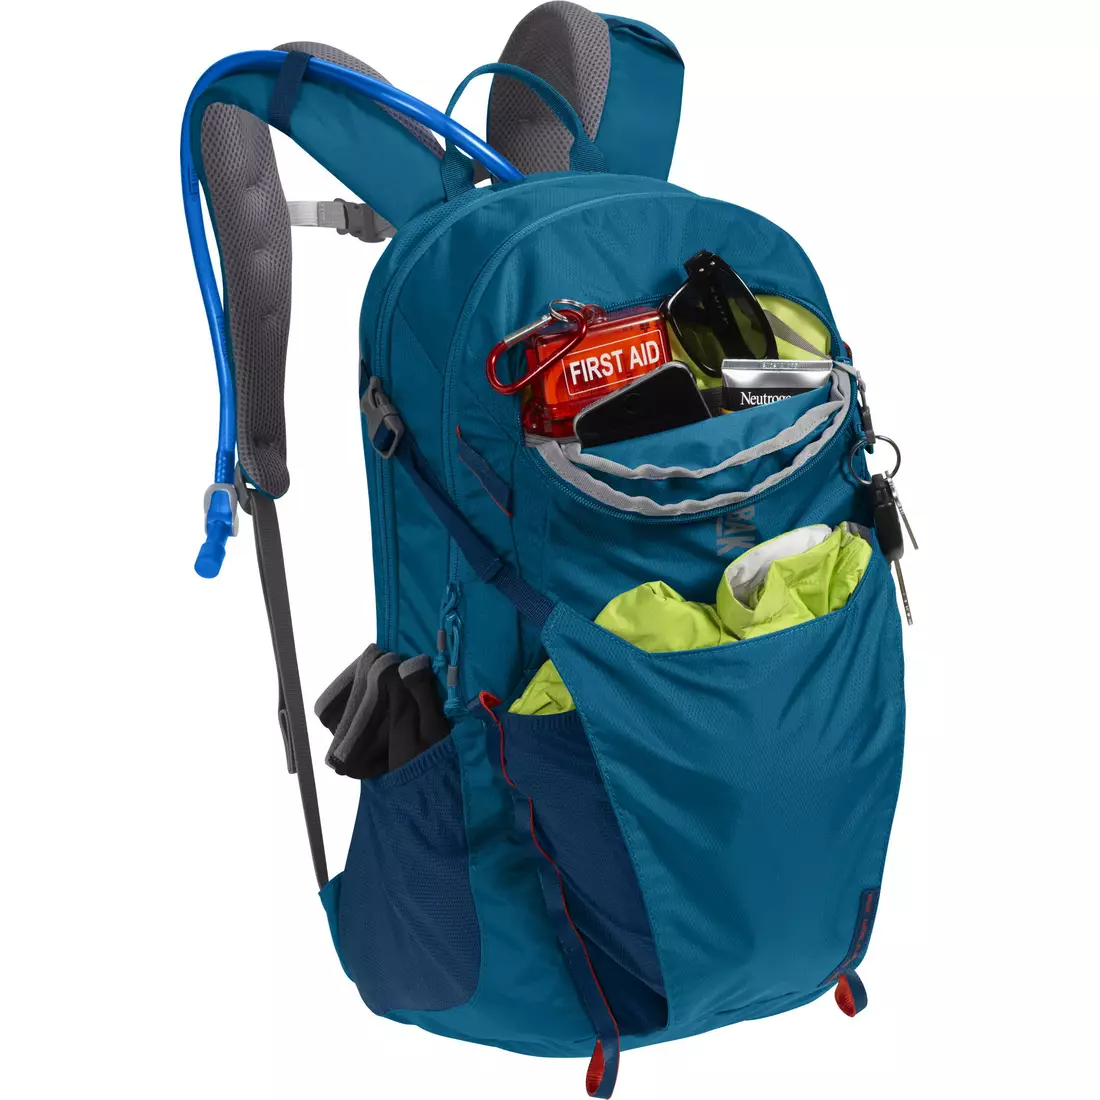 Camelbak SS17 running backpack Rim Runner 22 85oz/ 2.5L Charcoal/Grecian Blue 1105001900